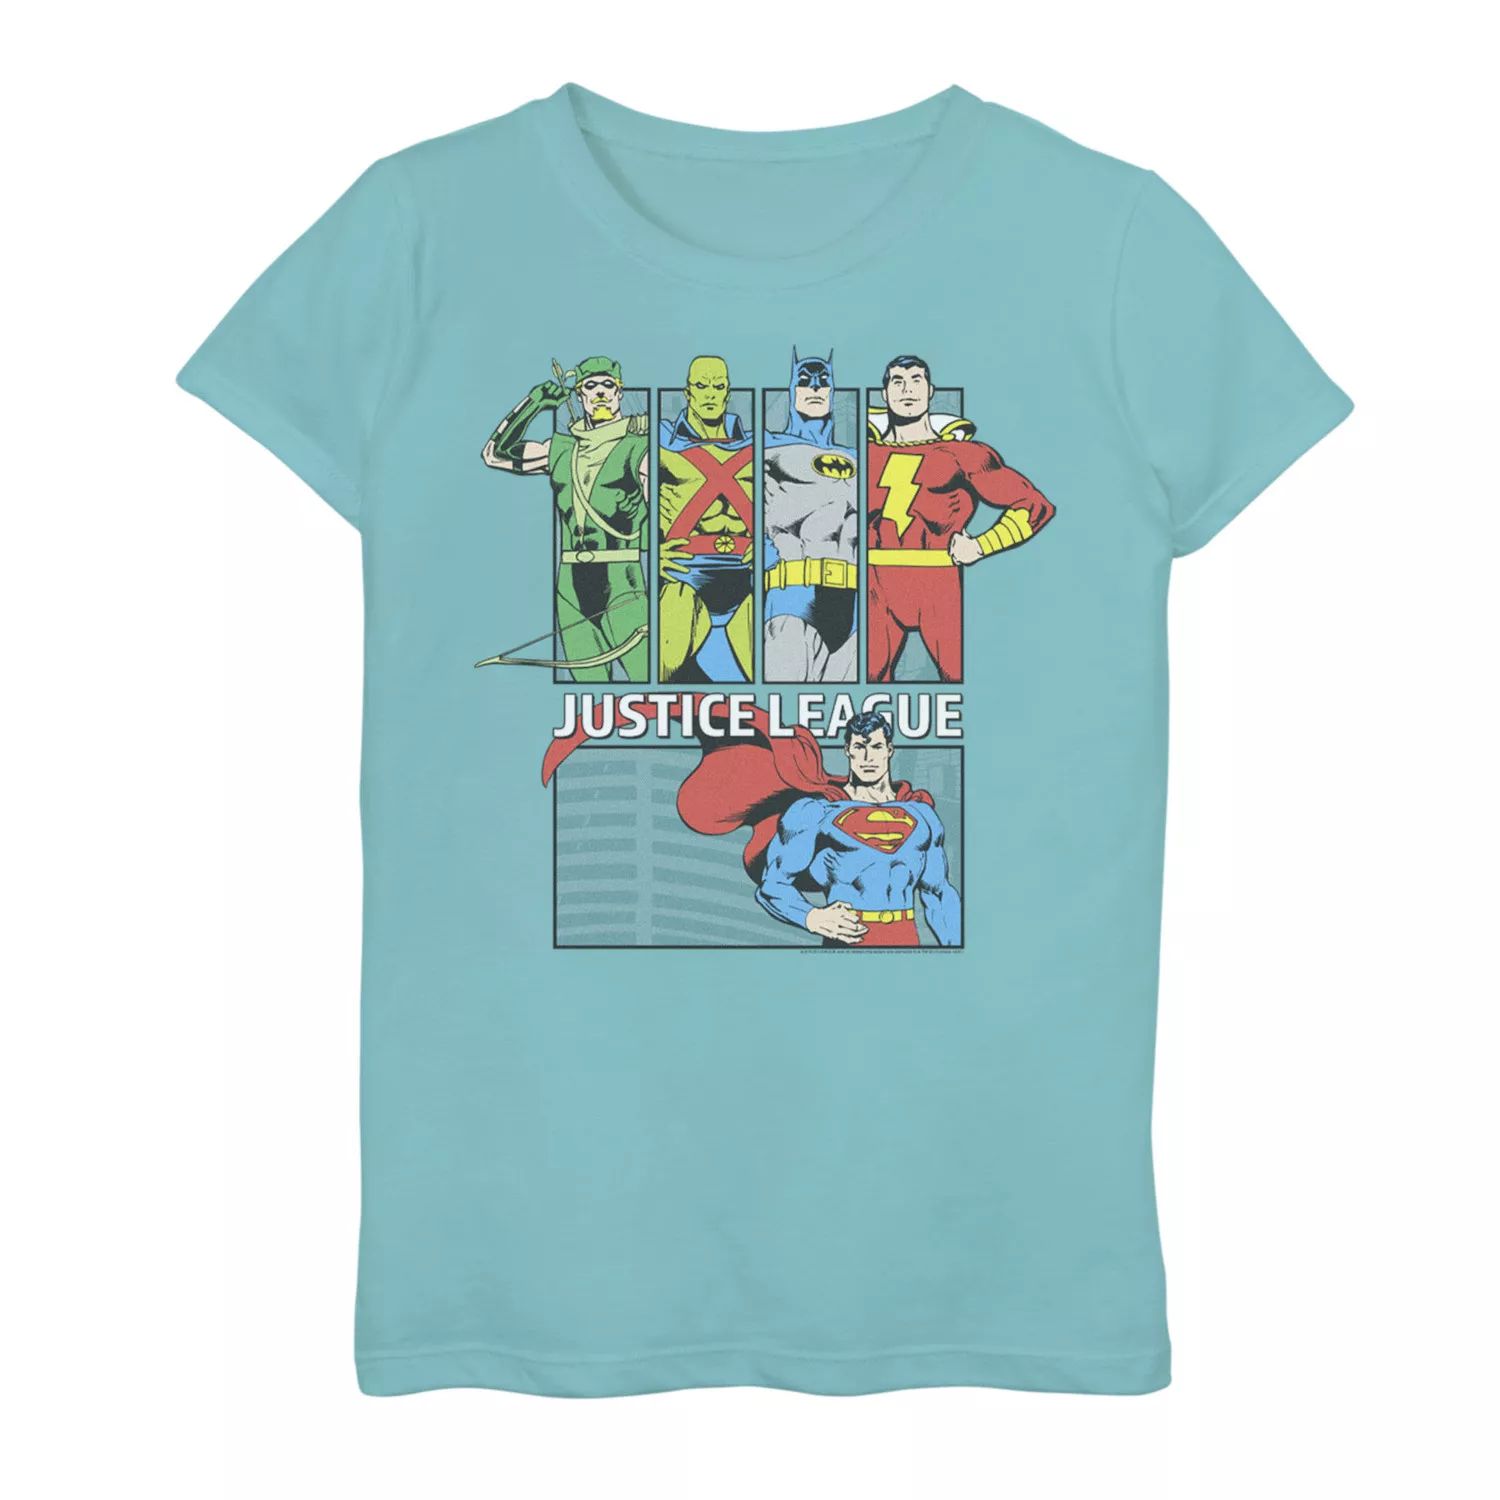 Футболка с графическим рисунком и панелями «Лига справедливости DC Comics» для девочек 7–16 лет DC Comics футболка с геометрическим плакатом и графическим рисунком dc comics для девочек 7–16 лет с бэтменом dc comics